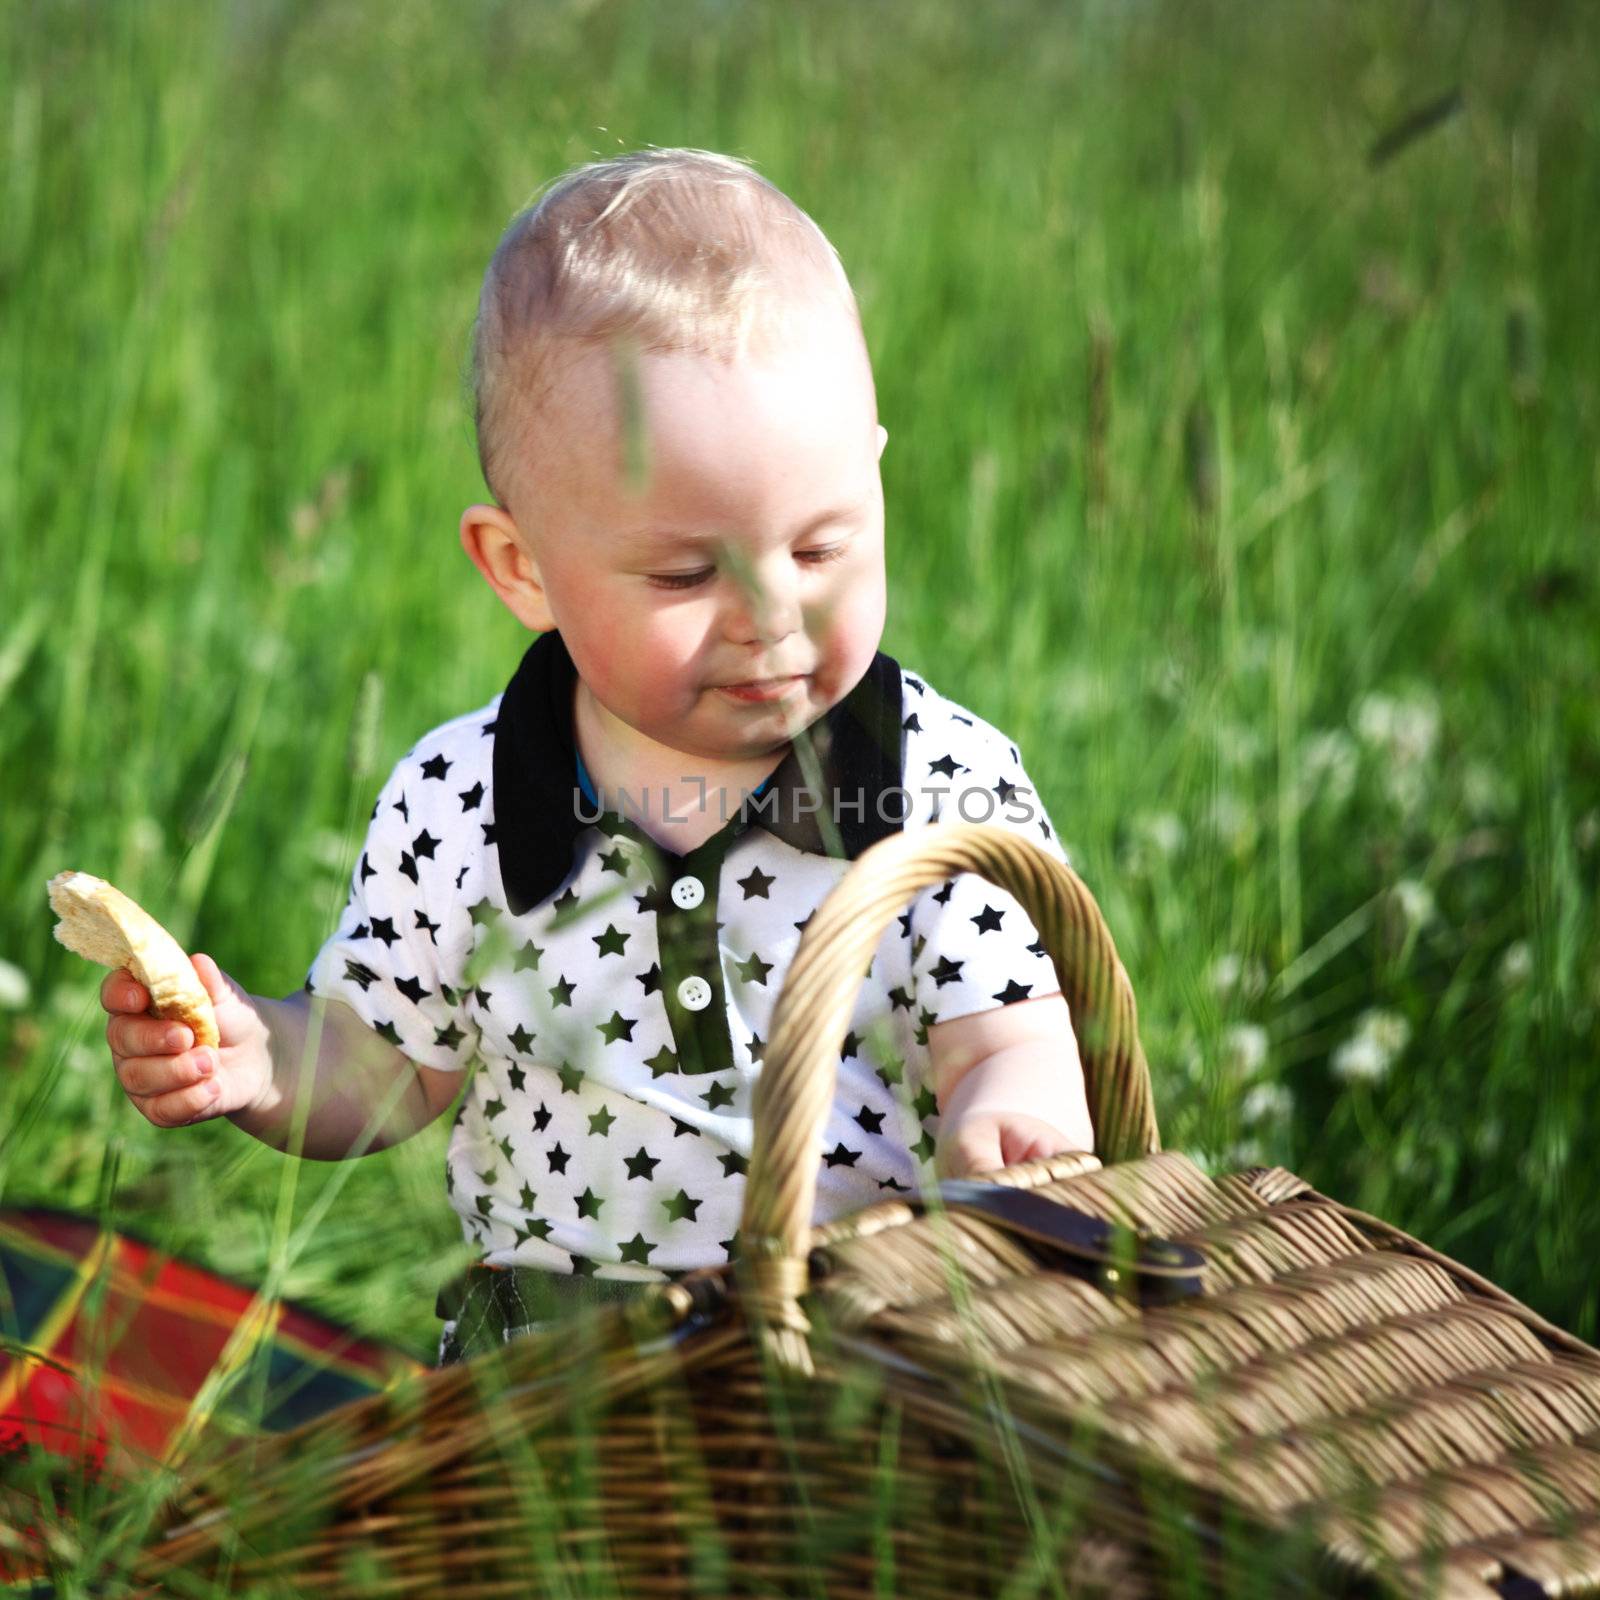  boy on picnic by Yellowj